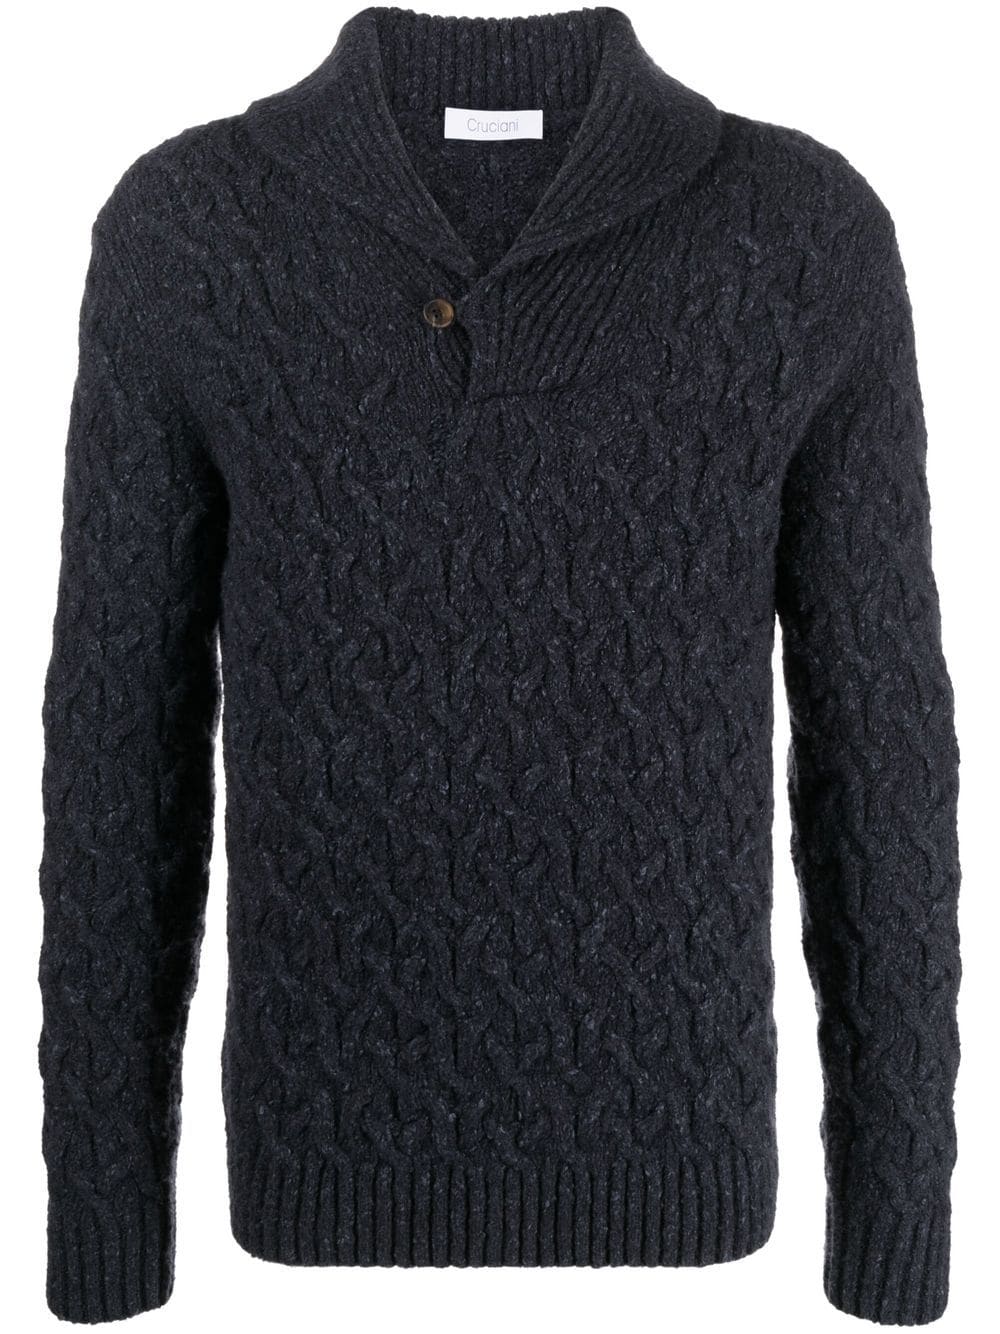 Cruciani off-centre button knit jumper - Blue